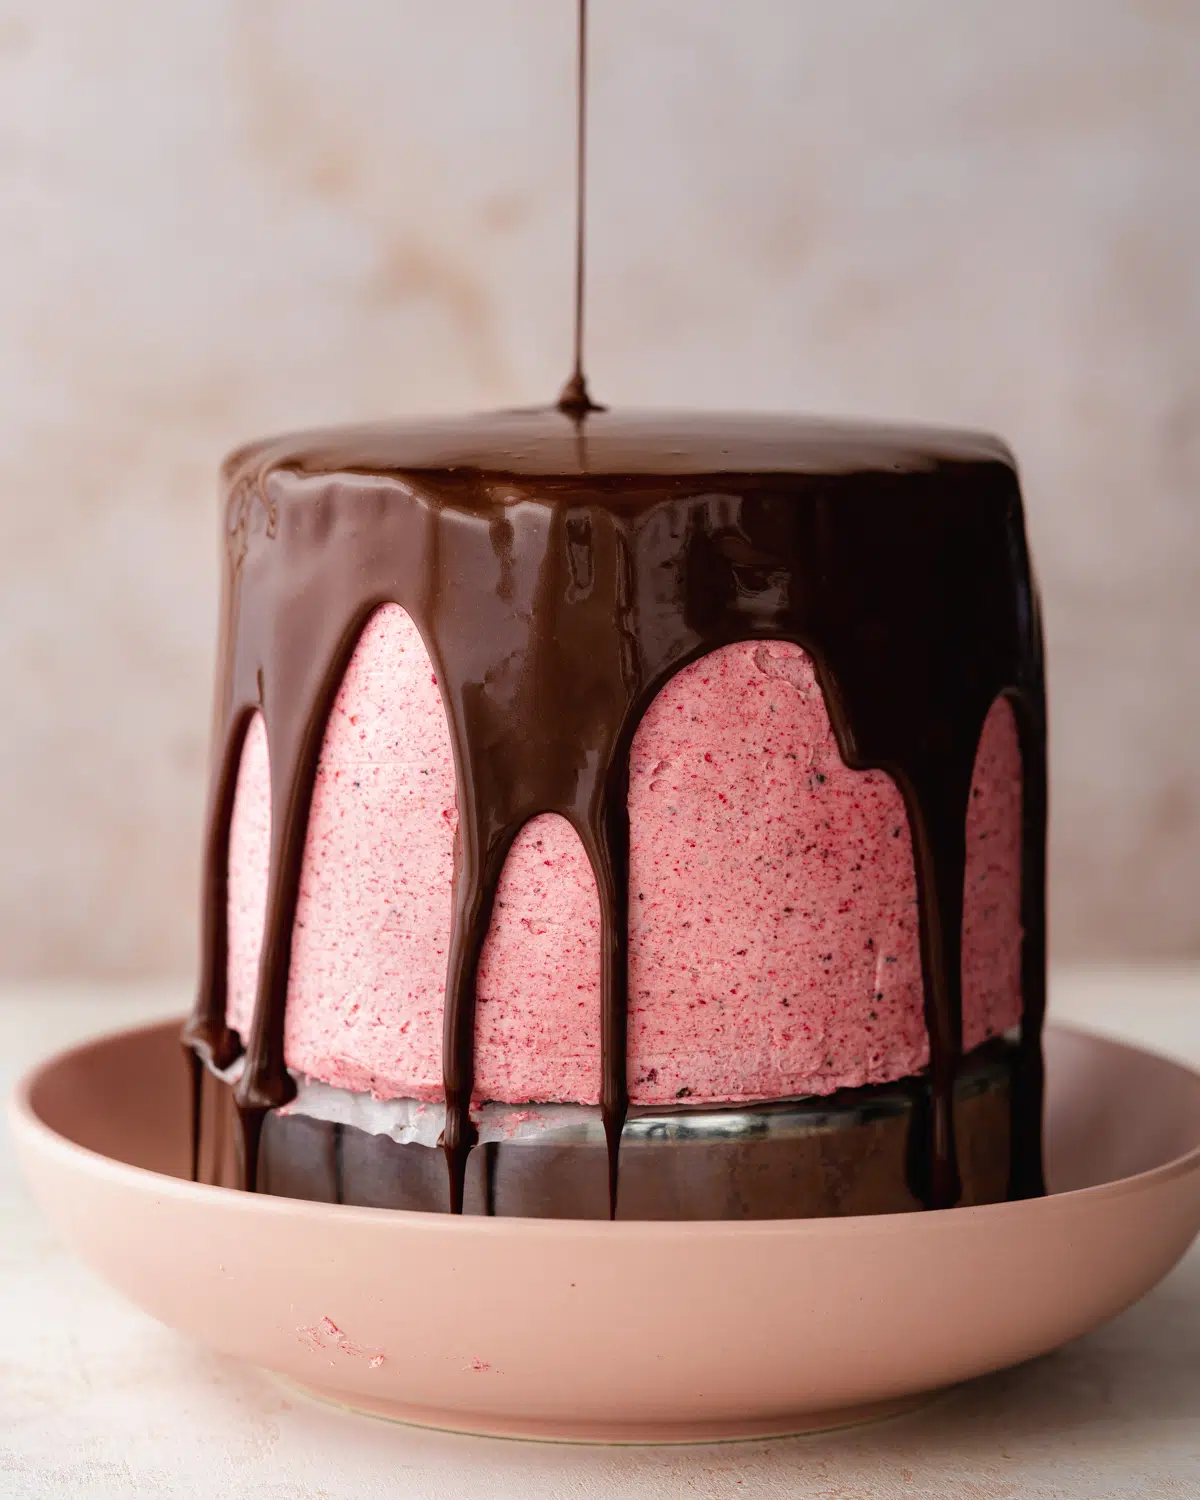 chocolate raspberry cake with chocolate ganache drip.